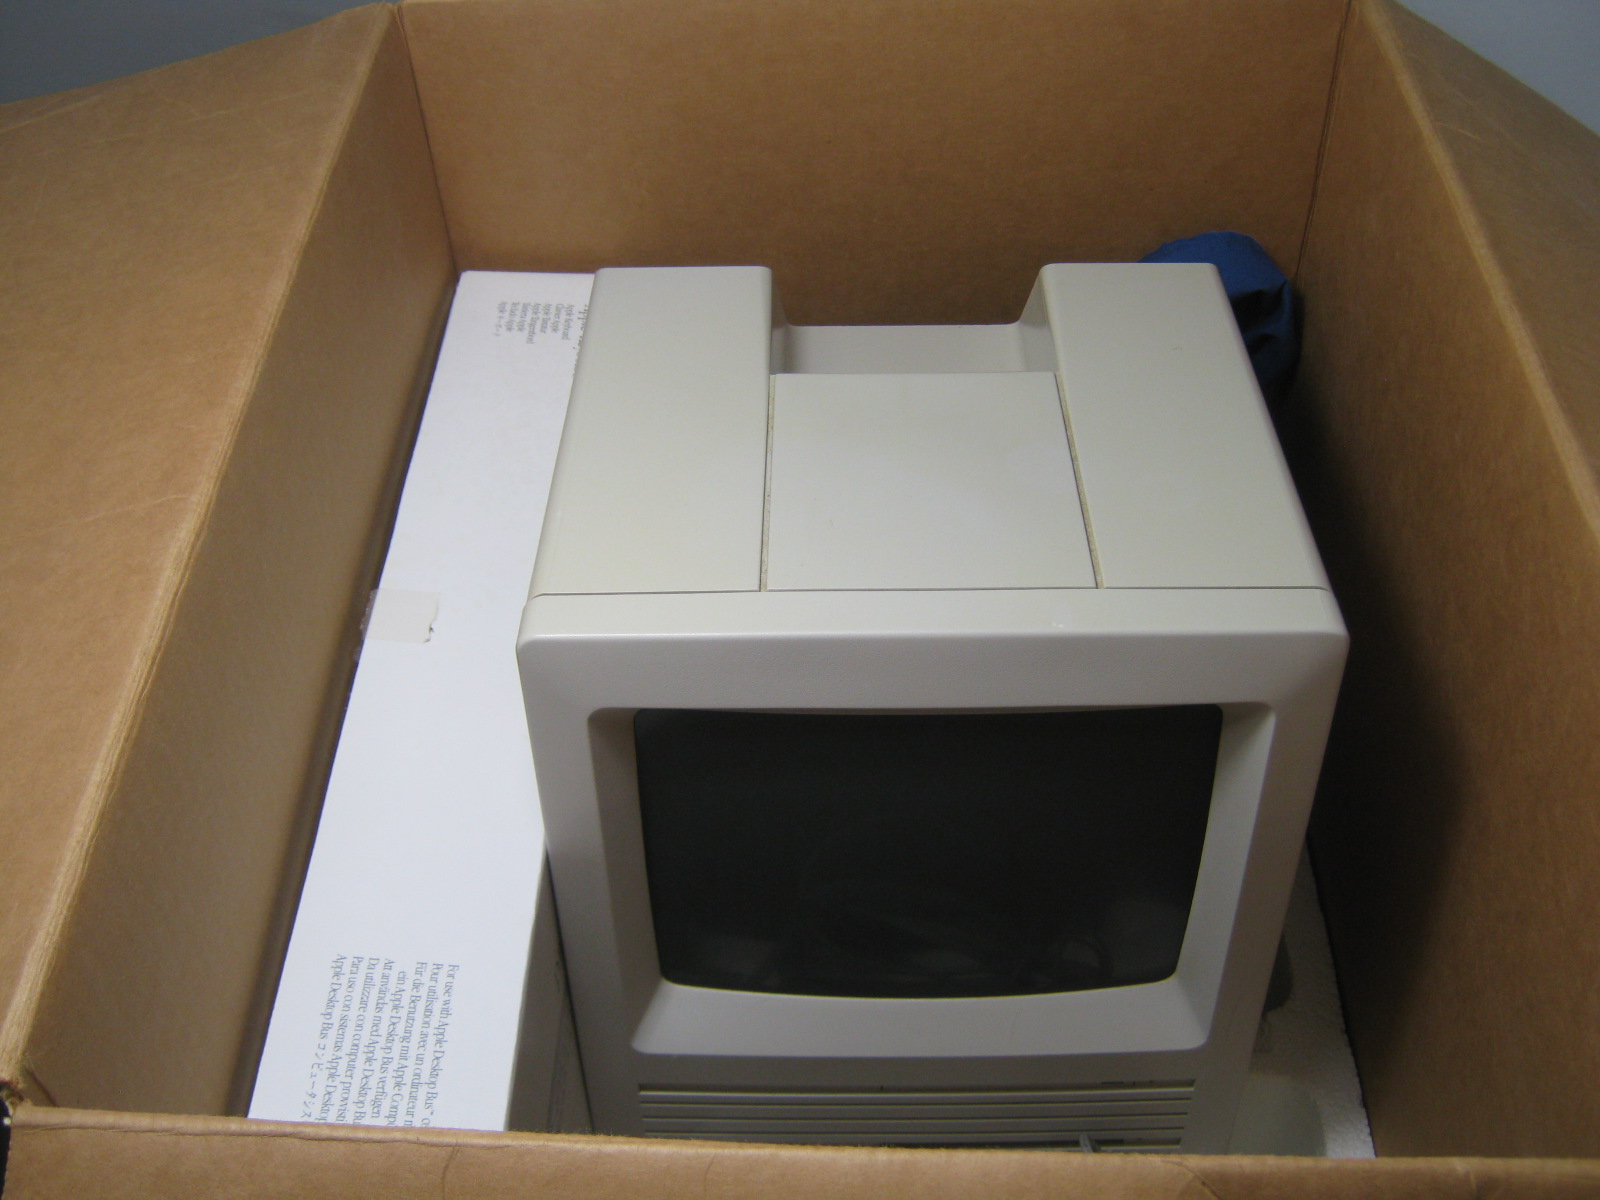 Vtg Apple Macintosh SE Desktop Computer 1MB Ram 800k Drive Mouse Keyboard In Box 12